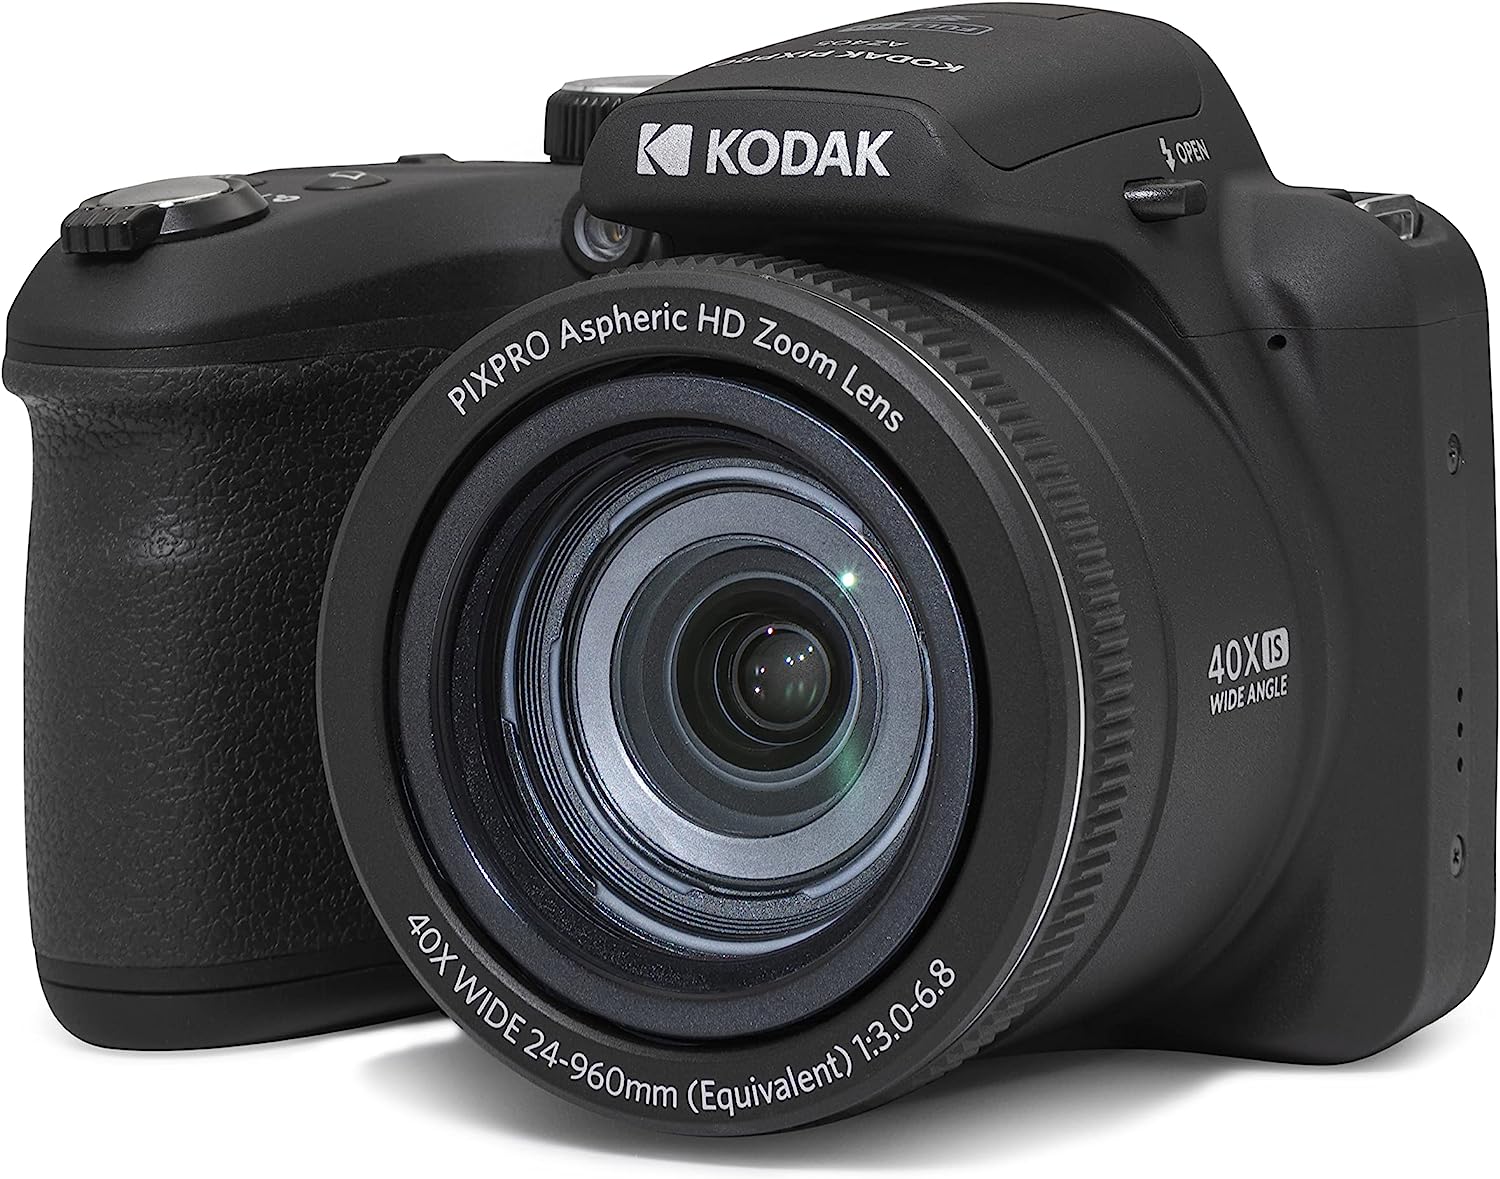 KODAK PIXPRO AZ405-BK 20MP Digital Camera 40X Optical Zoom 24mm Wide Angle Lens Optical Image Stabilization 1080P Full HD Video 3